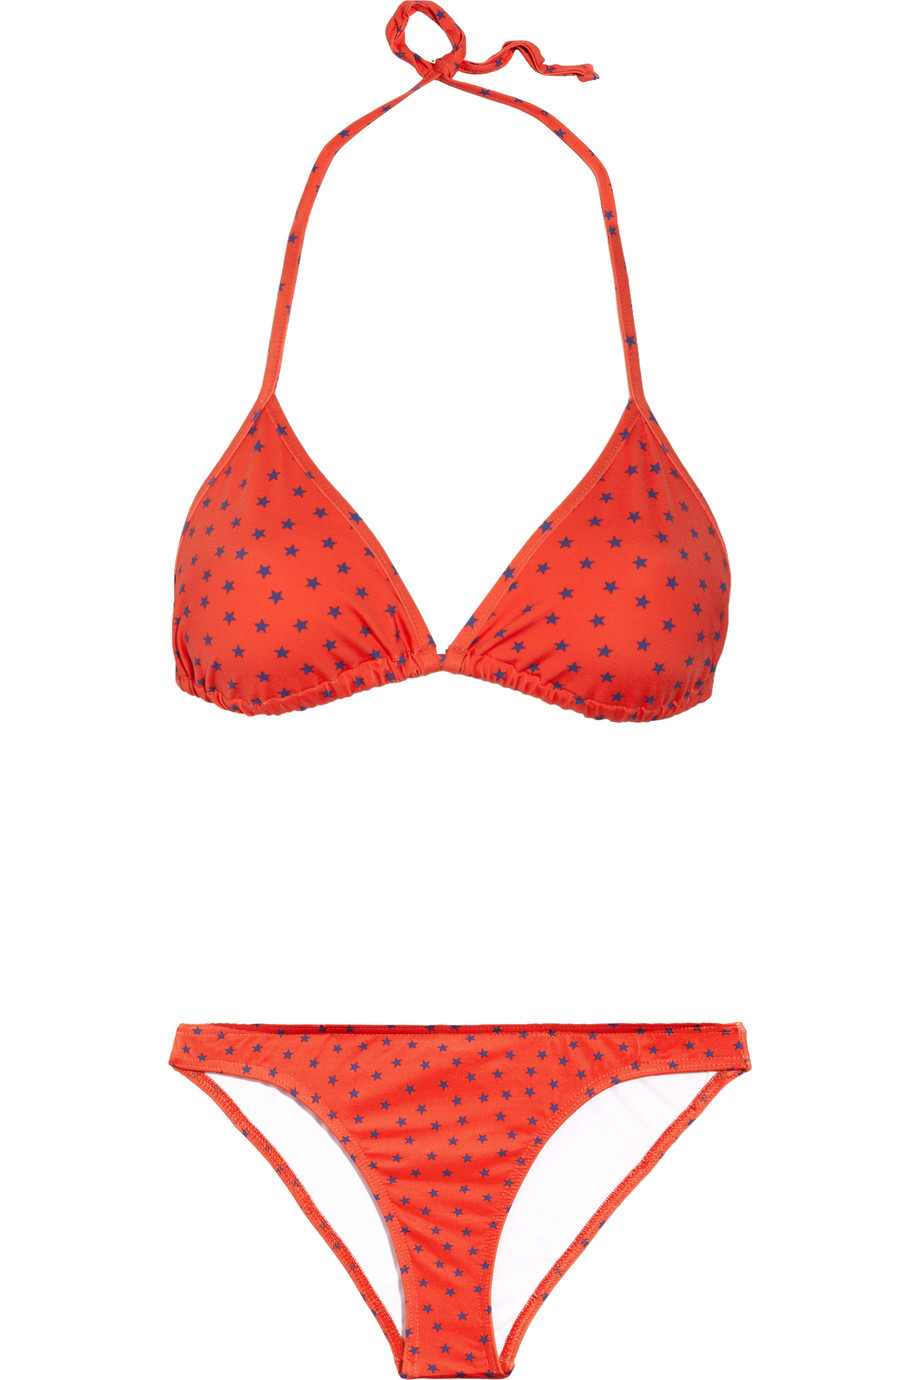 Paul & Joe Bath star-print triangle bikini - 60% Off Now at THE OUTNET ...